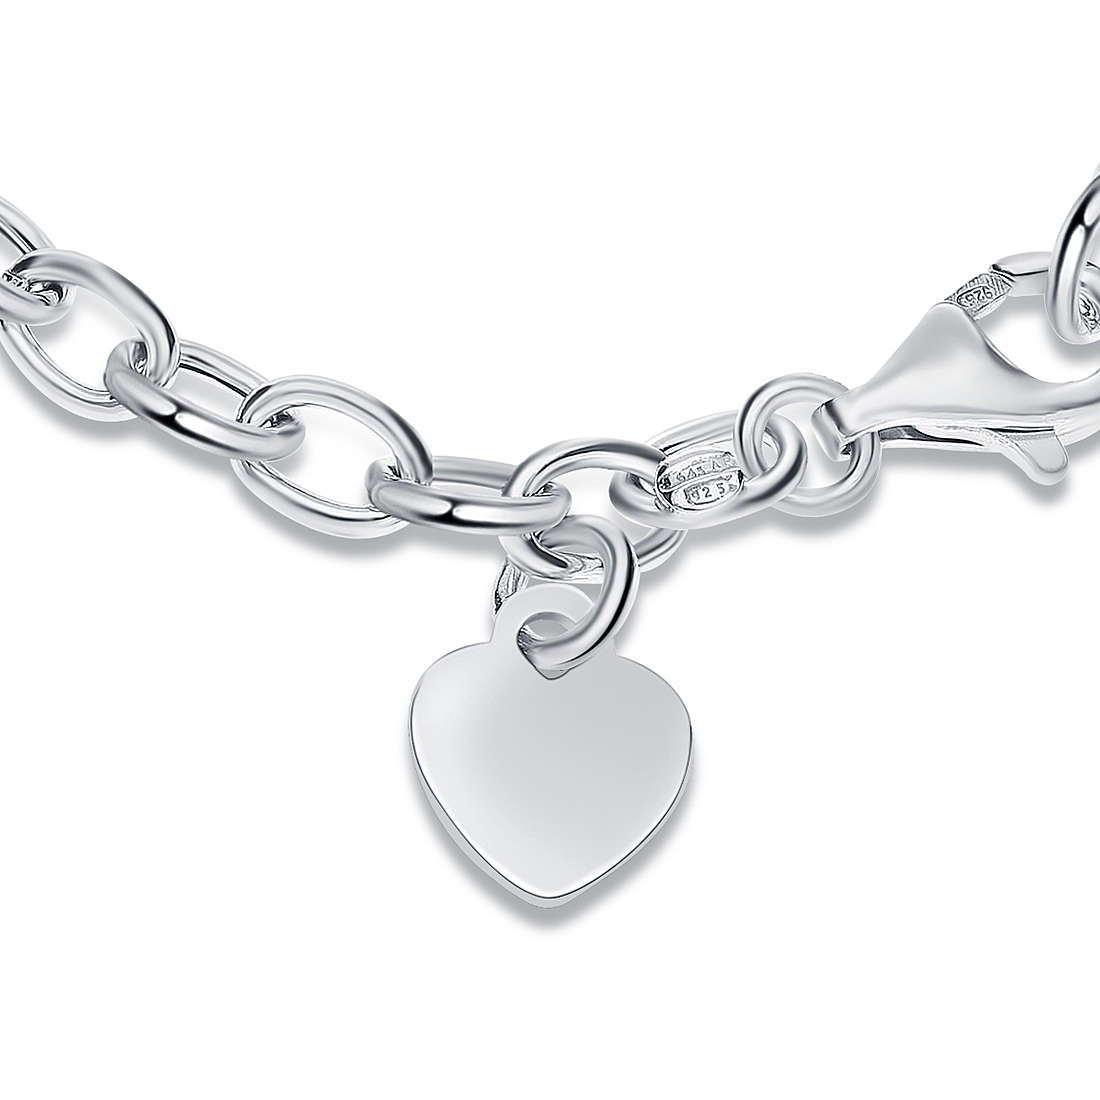 bracelet woman Chain 925 Silver jewel GioiaPura WBM01307LL